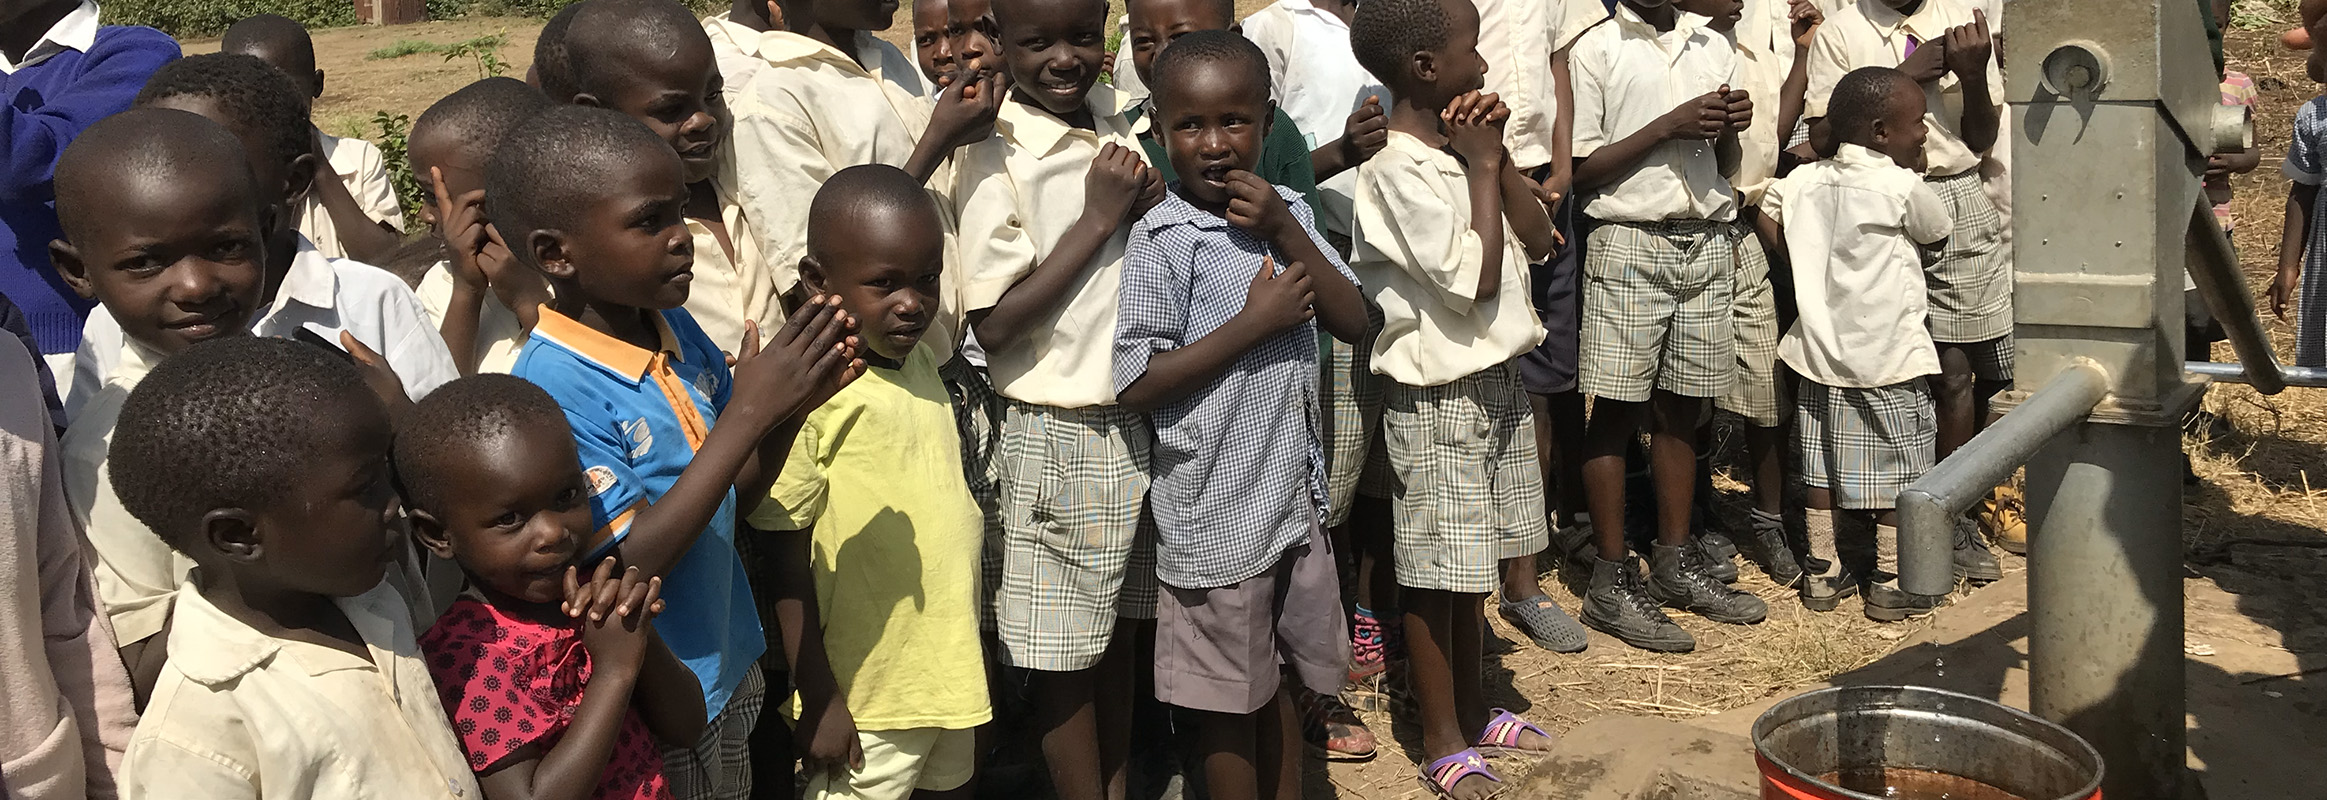 School children in uniforms gathered around a new hand pump well in their schoolyard, eagerly awaiting fresh water.